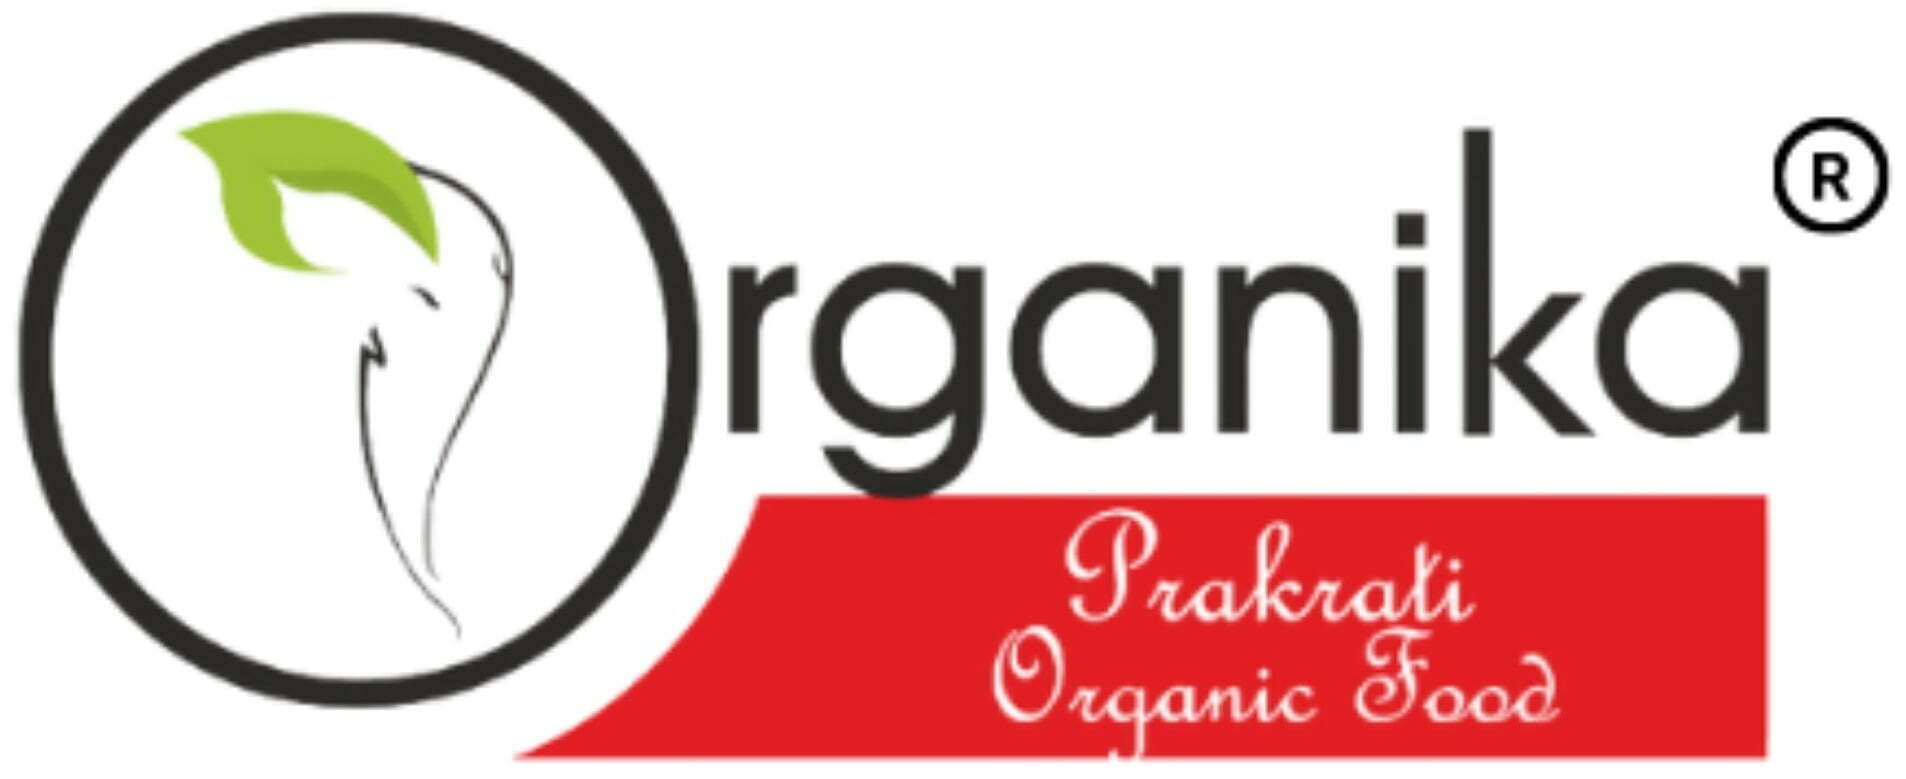 Prakrati Organic Food 